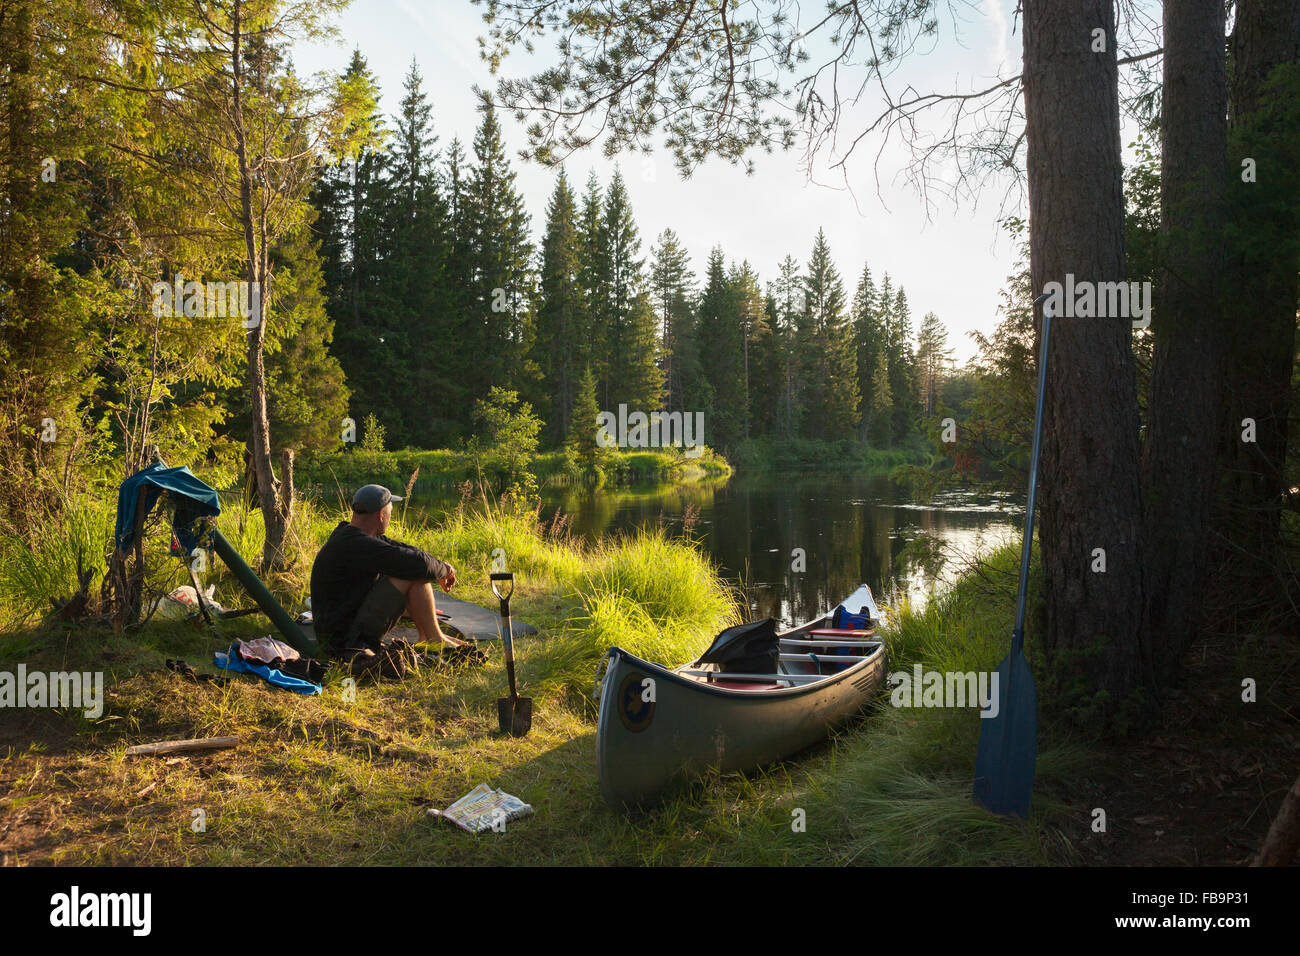 La Svezia, Vastmanland, Svartalven, Uomo seduto in canoa sul fiume Foto Stock